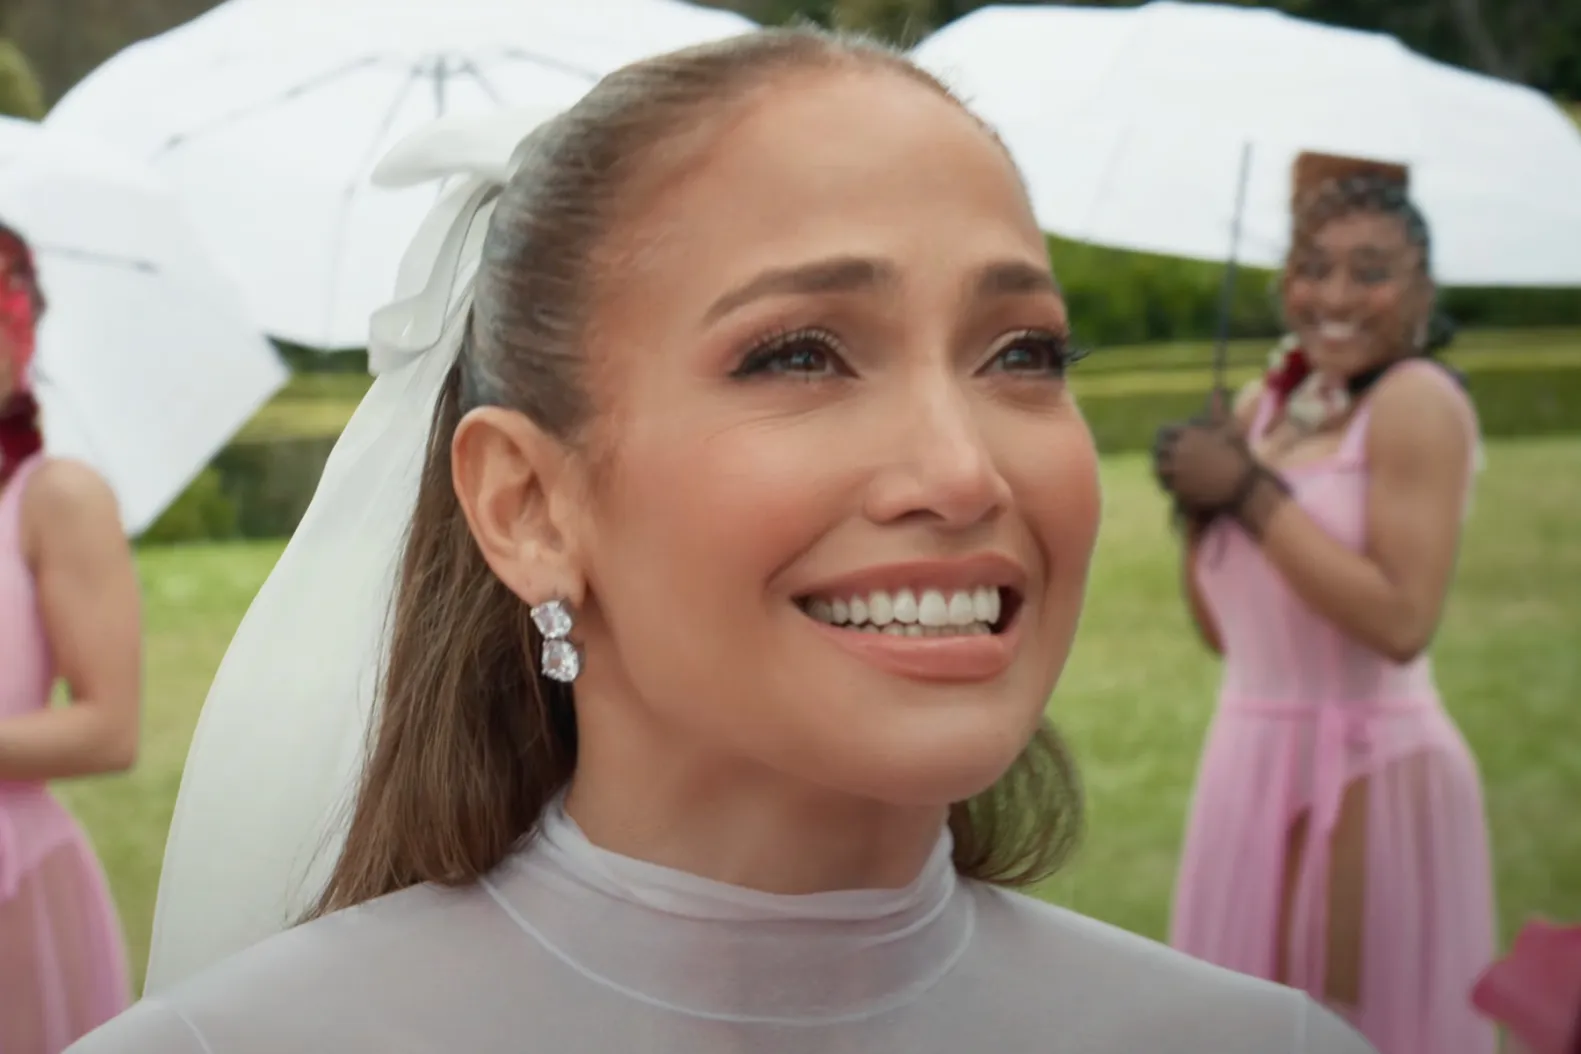 Jennifer Lopez Celebrates Love in Playful Music Video